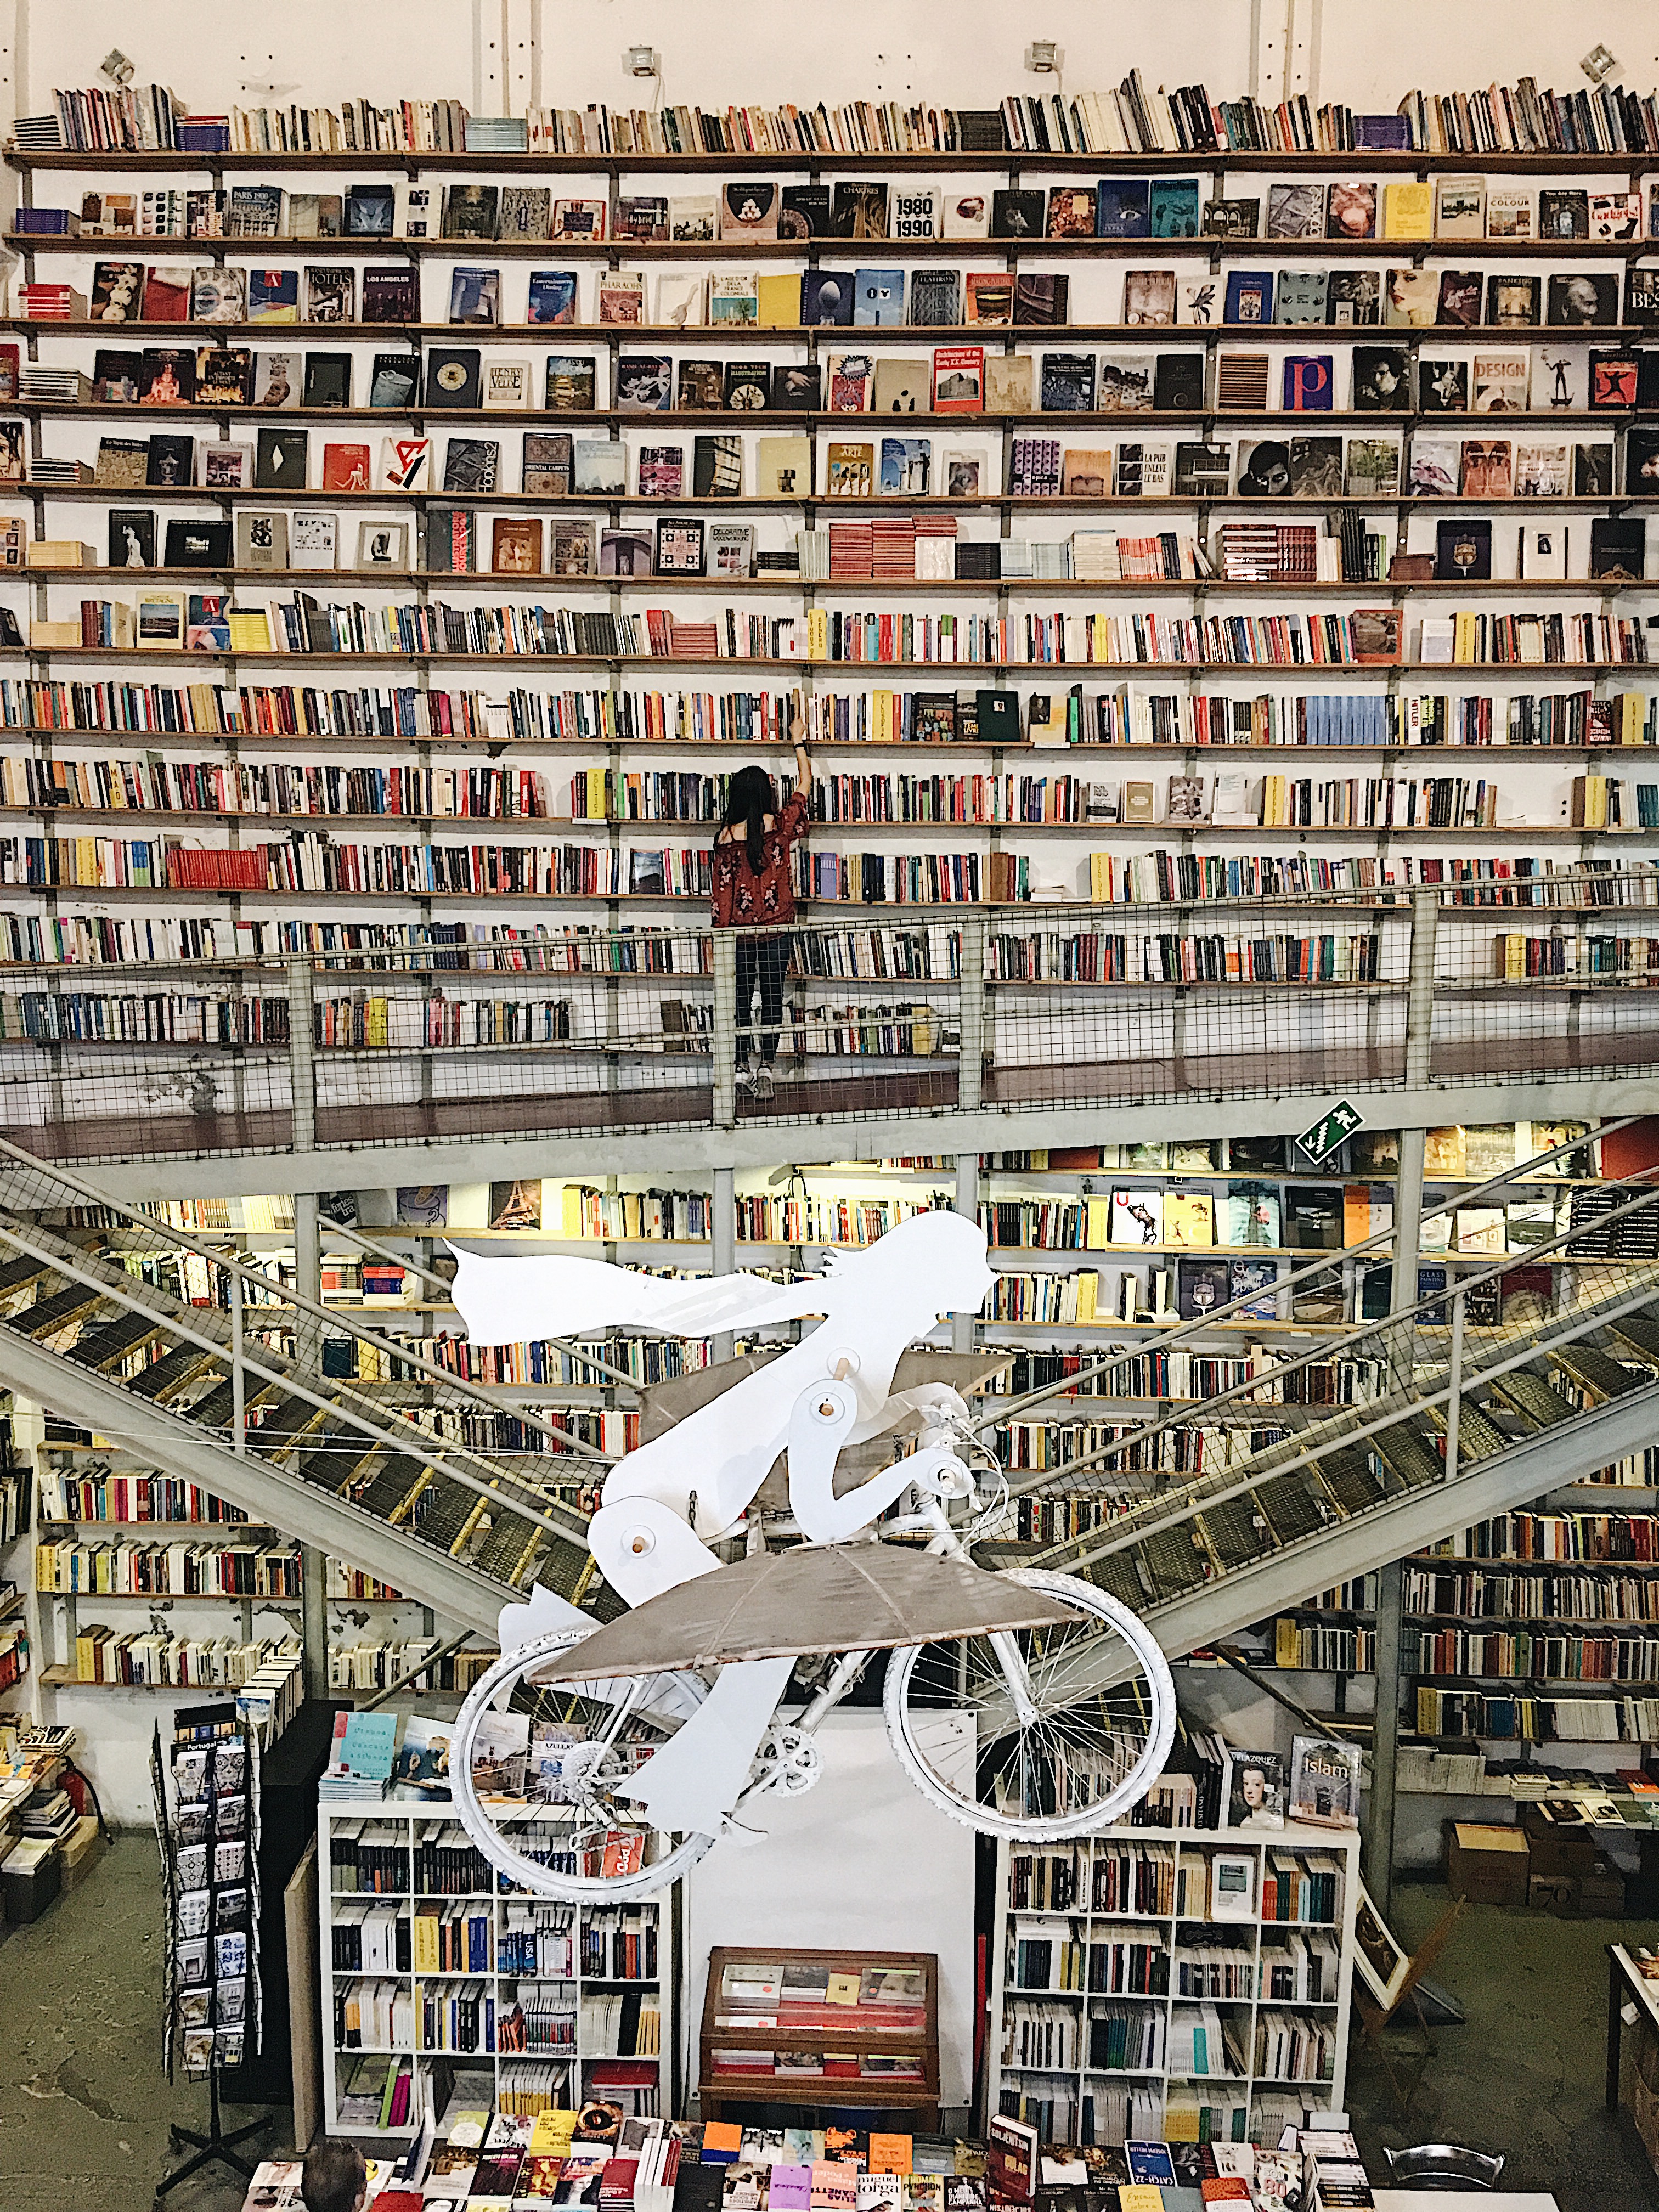 Ler Devagar bookstore in Lisbon